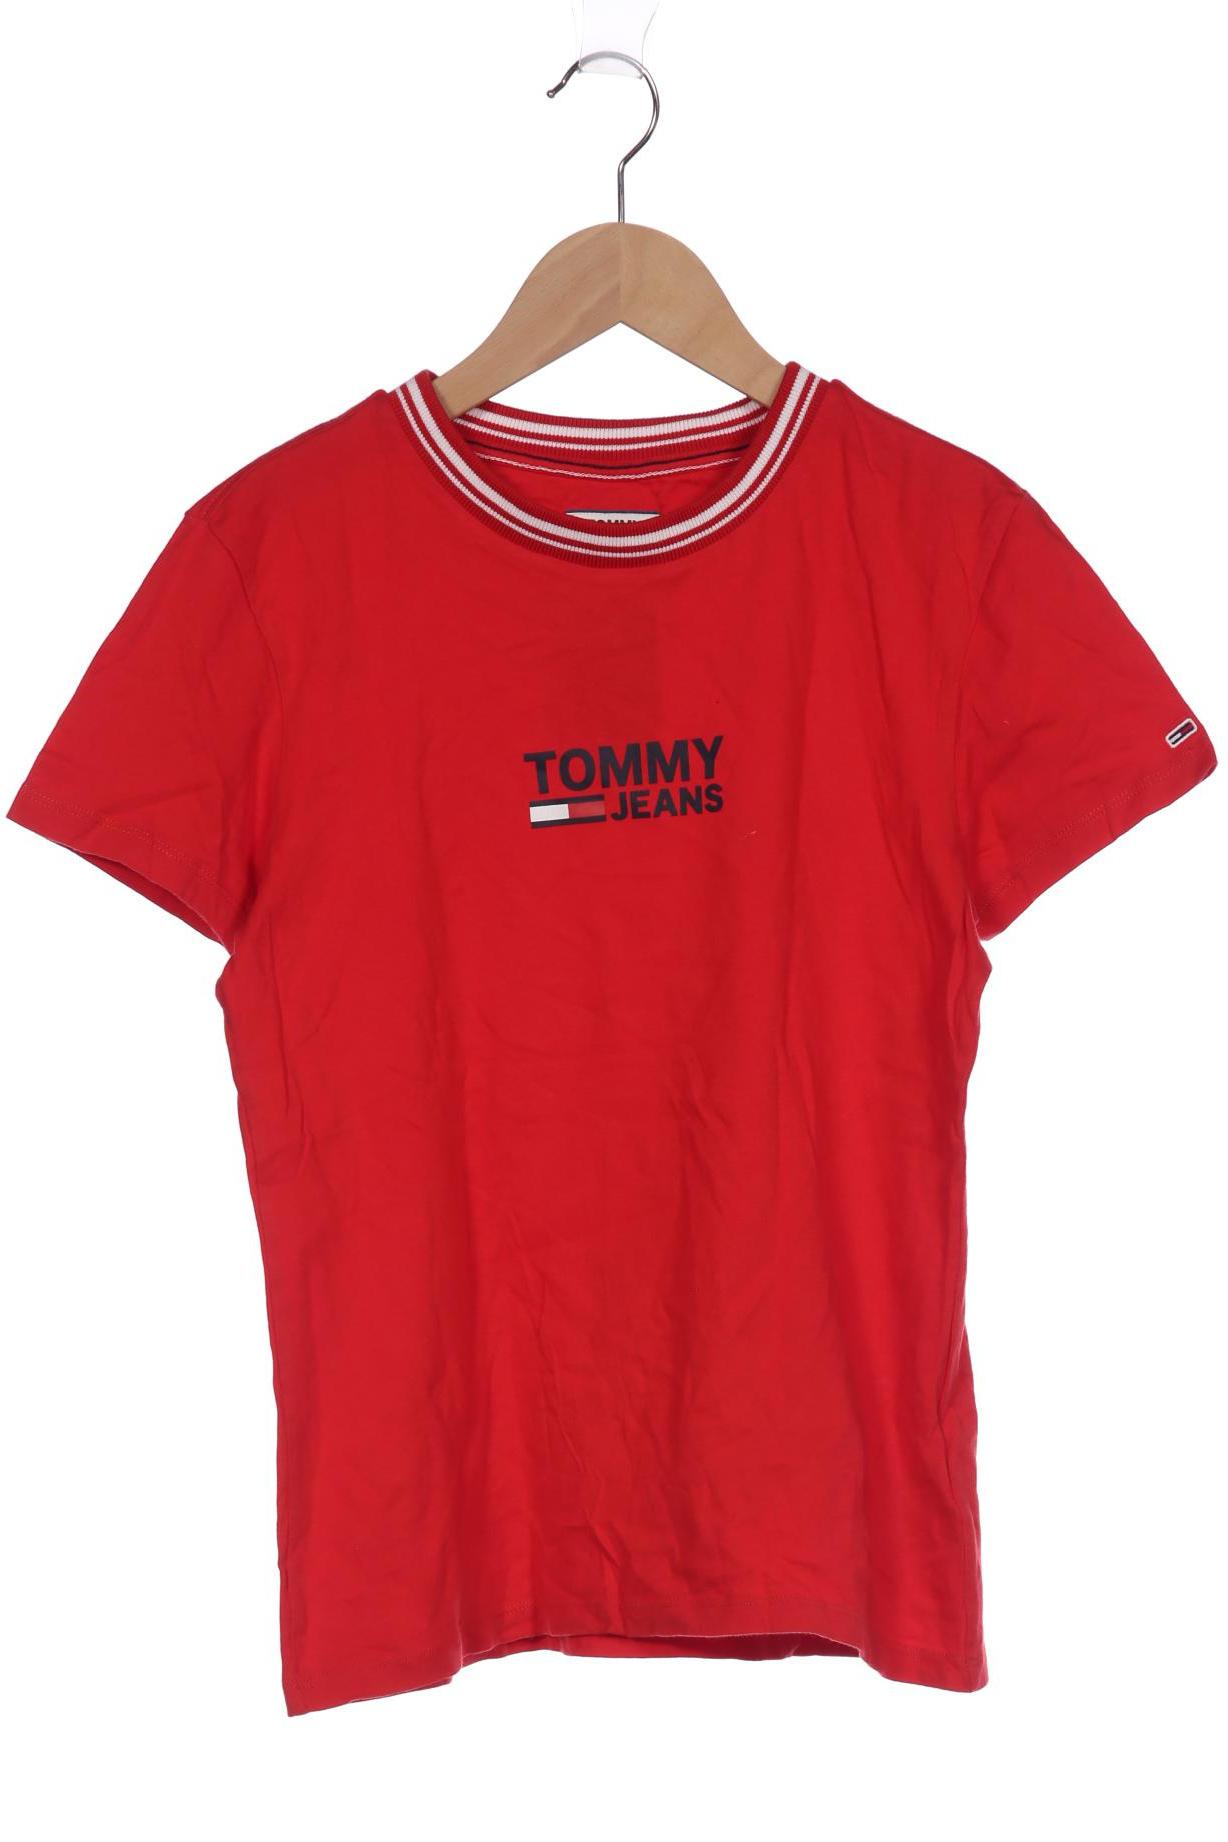 Tommy Jeans Damen T-Shirt, rot, Gr. 34 von Tommy Jeans